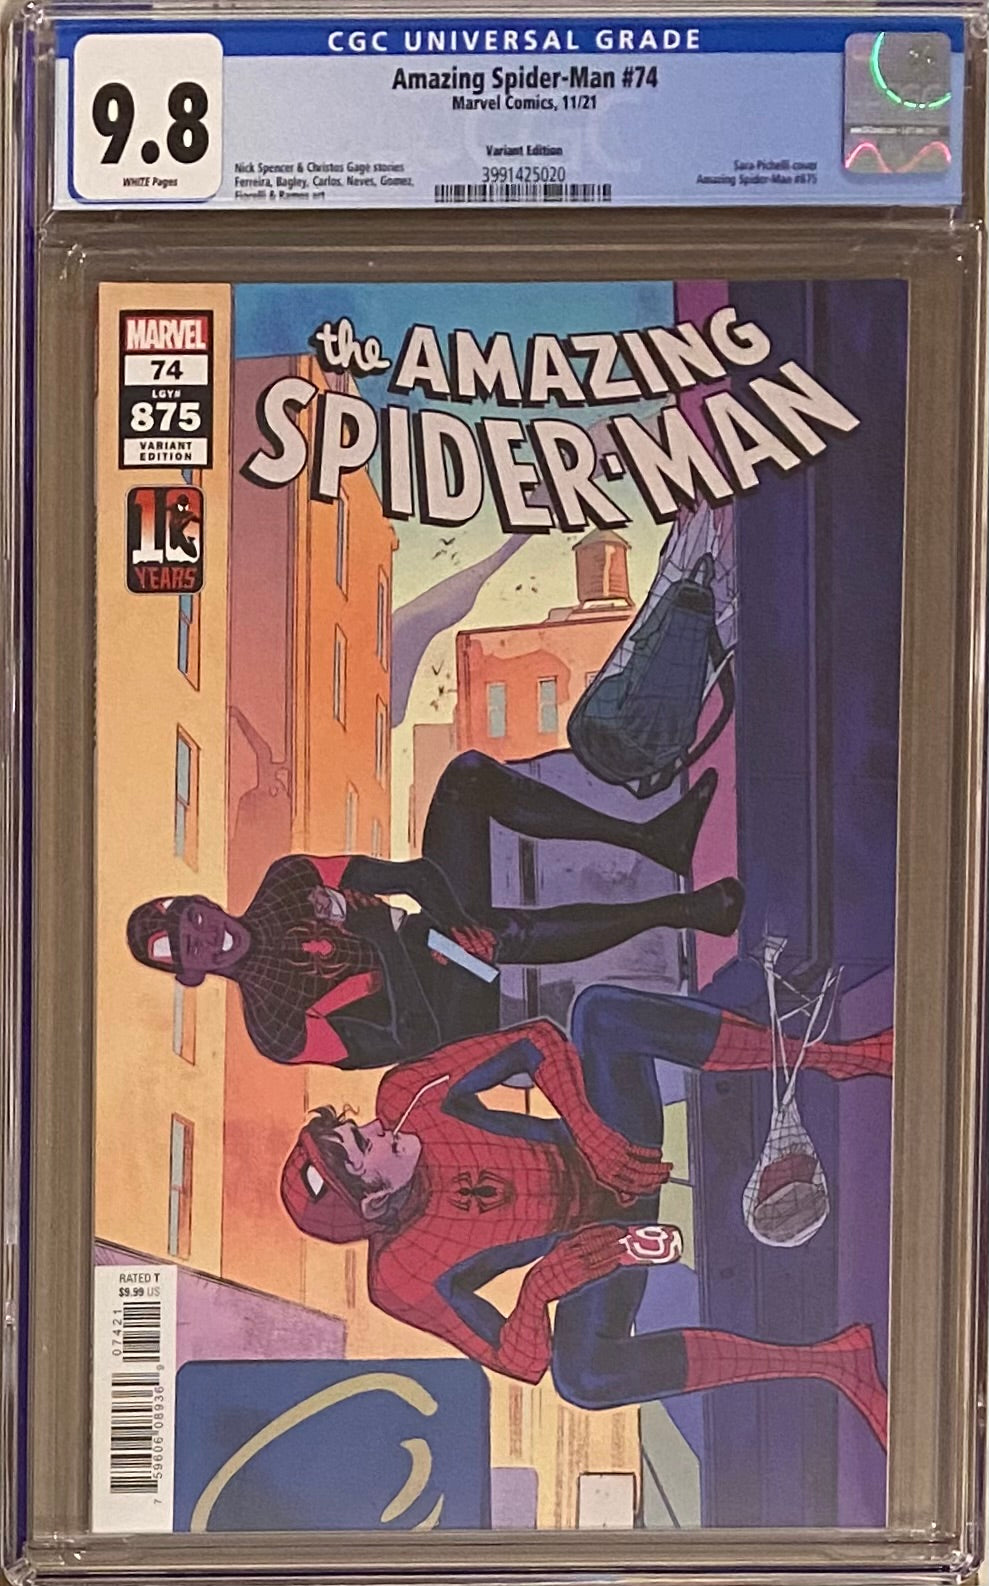 Amazing Spider-Man #74 (#875) Pichelli Miles Morales 10th Anniversary Variant CGC 9.8